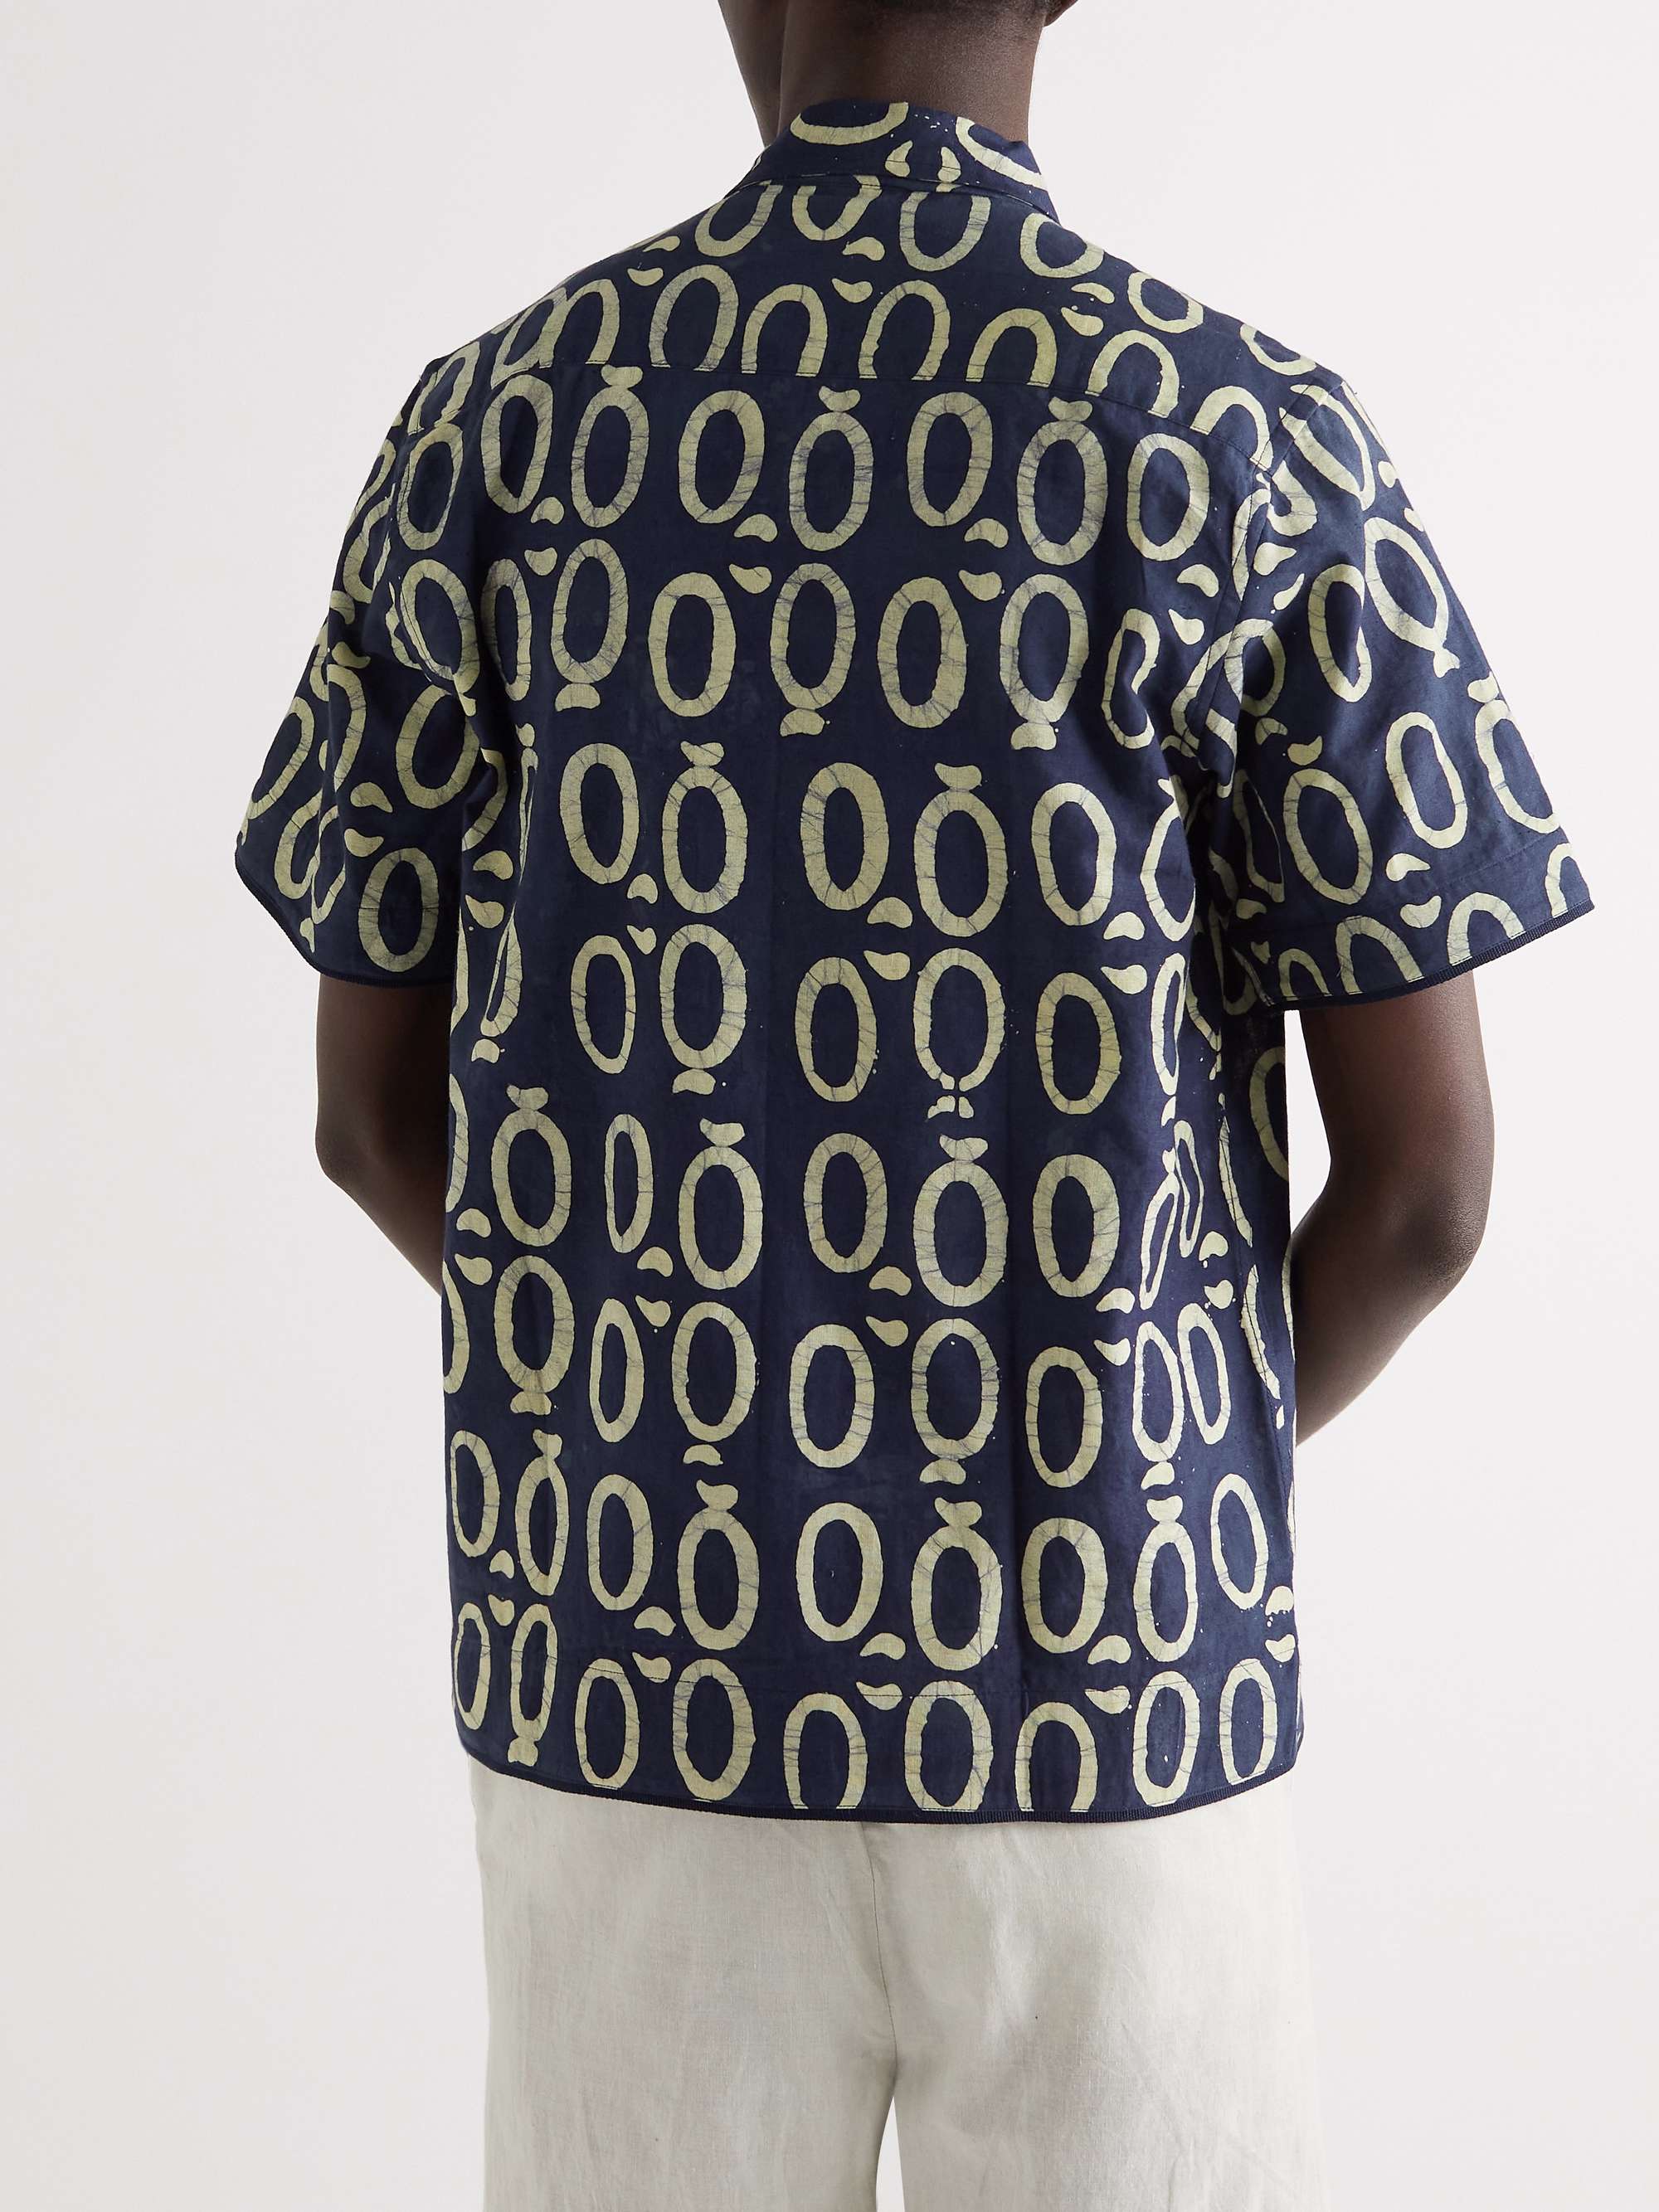 OBIDA Twill-Trimmed Printed Cotton-Poplin Shirt